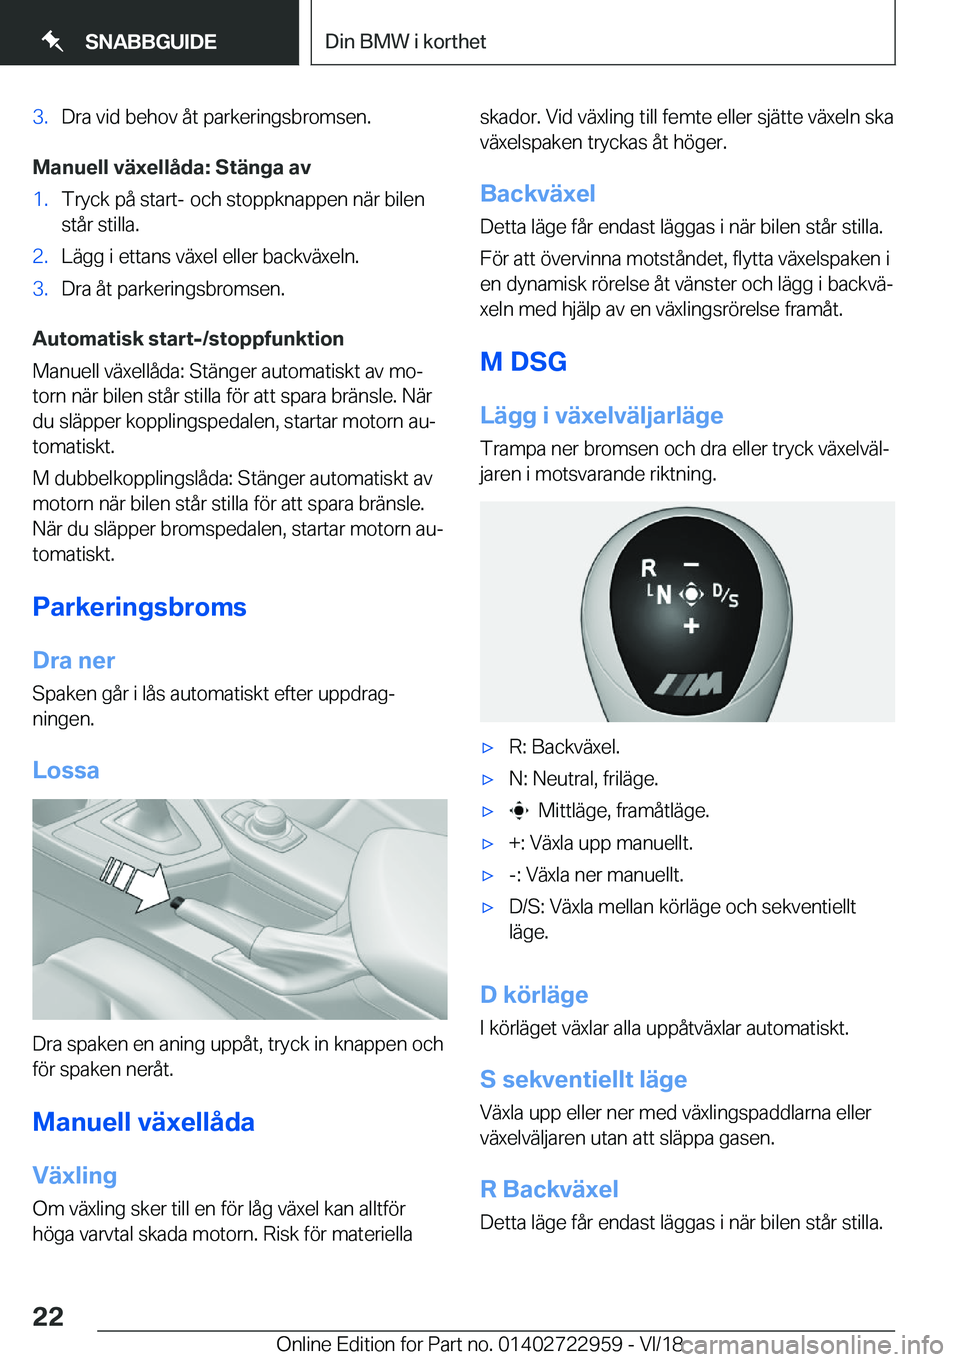 BMW M4 2019  InstruktionsbÖcker (in Swedish) �3�.�D�r�a��v�i�d��b�e�h�o�v��å�t��p�a�r�k�e�r�i�n�g�s�b�r�o�m�s�e�n�.
�M�a�n�u�e�l�l��v�ä�x�e�l�l�å�d�a�:��S�t�ä�n�g�a��a�v
�1�.�T�r�y�c�k��p�å��s�t�a�r�t�-��o�c�h��s�t�o�p�p�k�n�a�p�